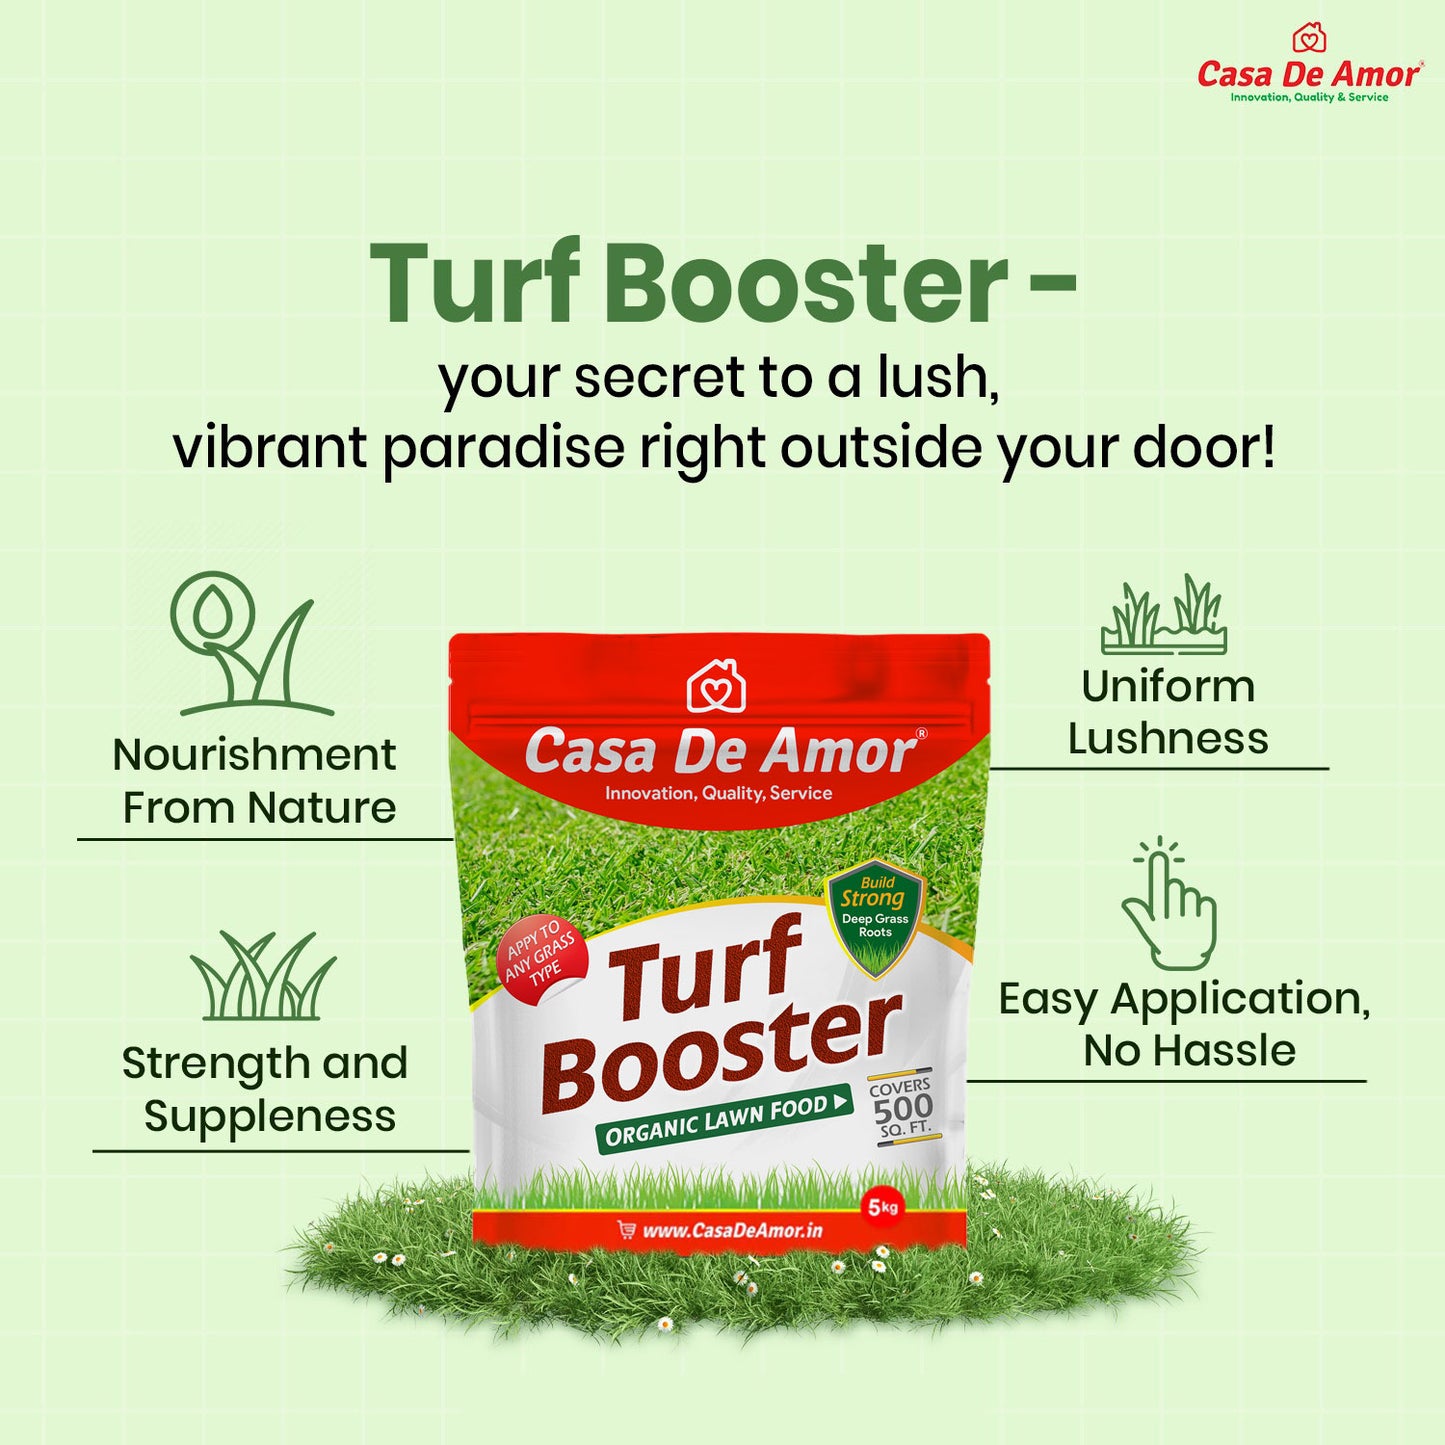 Casa De Amor Turf Booster Lawn Fertilizer Granules, Build Thick-Green Lawns (5 kg Bag Covers 500 sq. ft.)